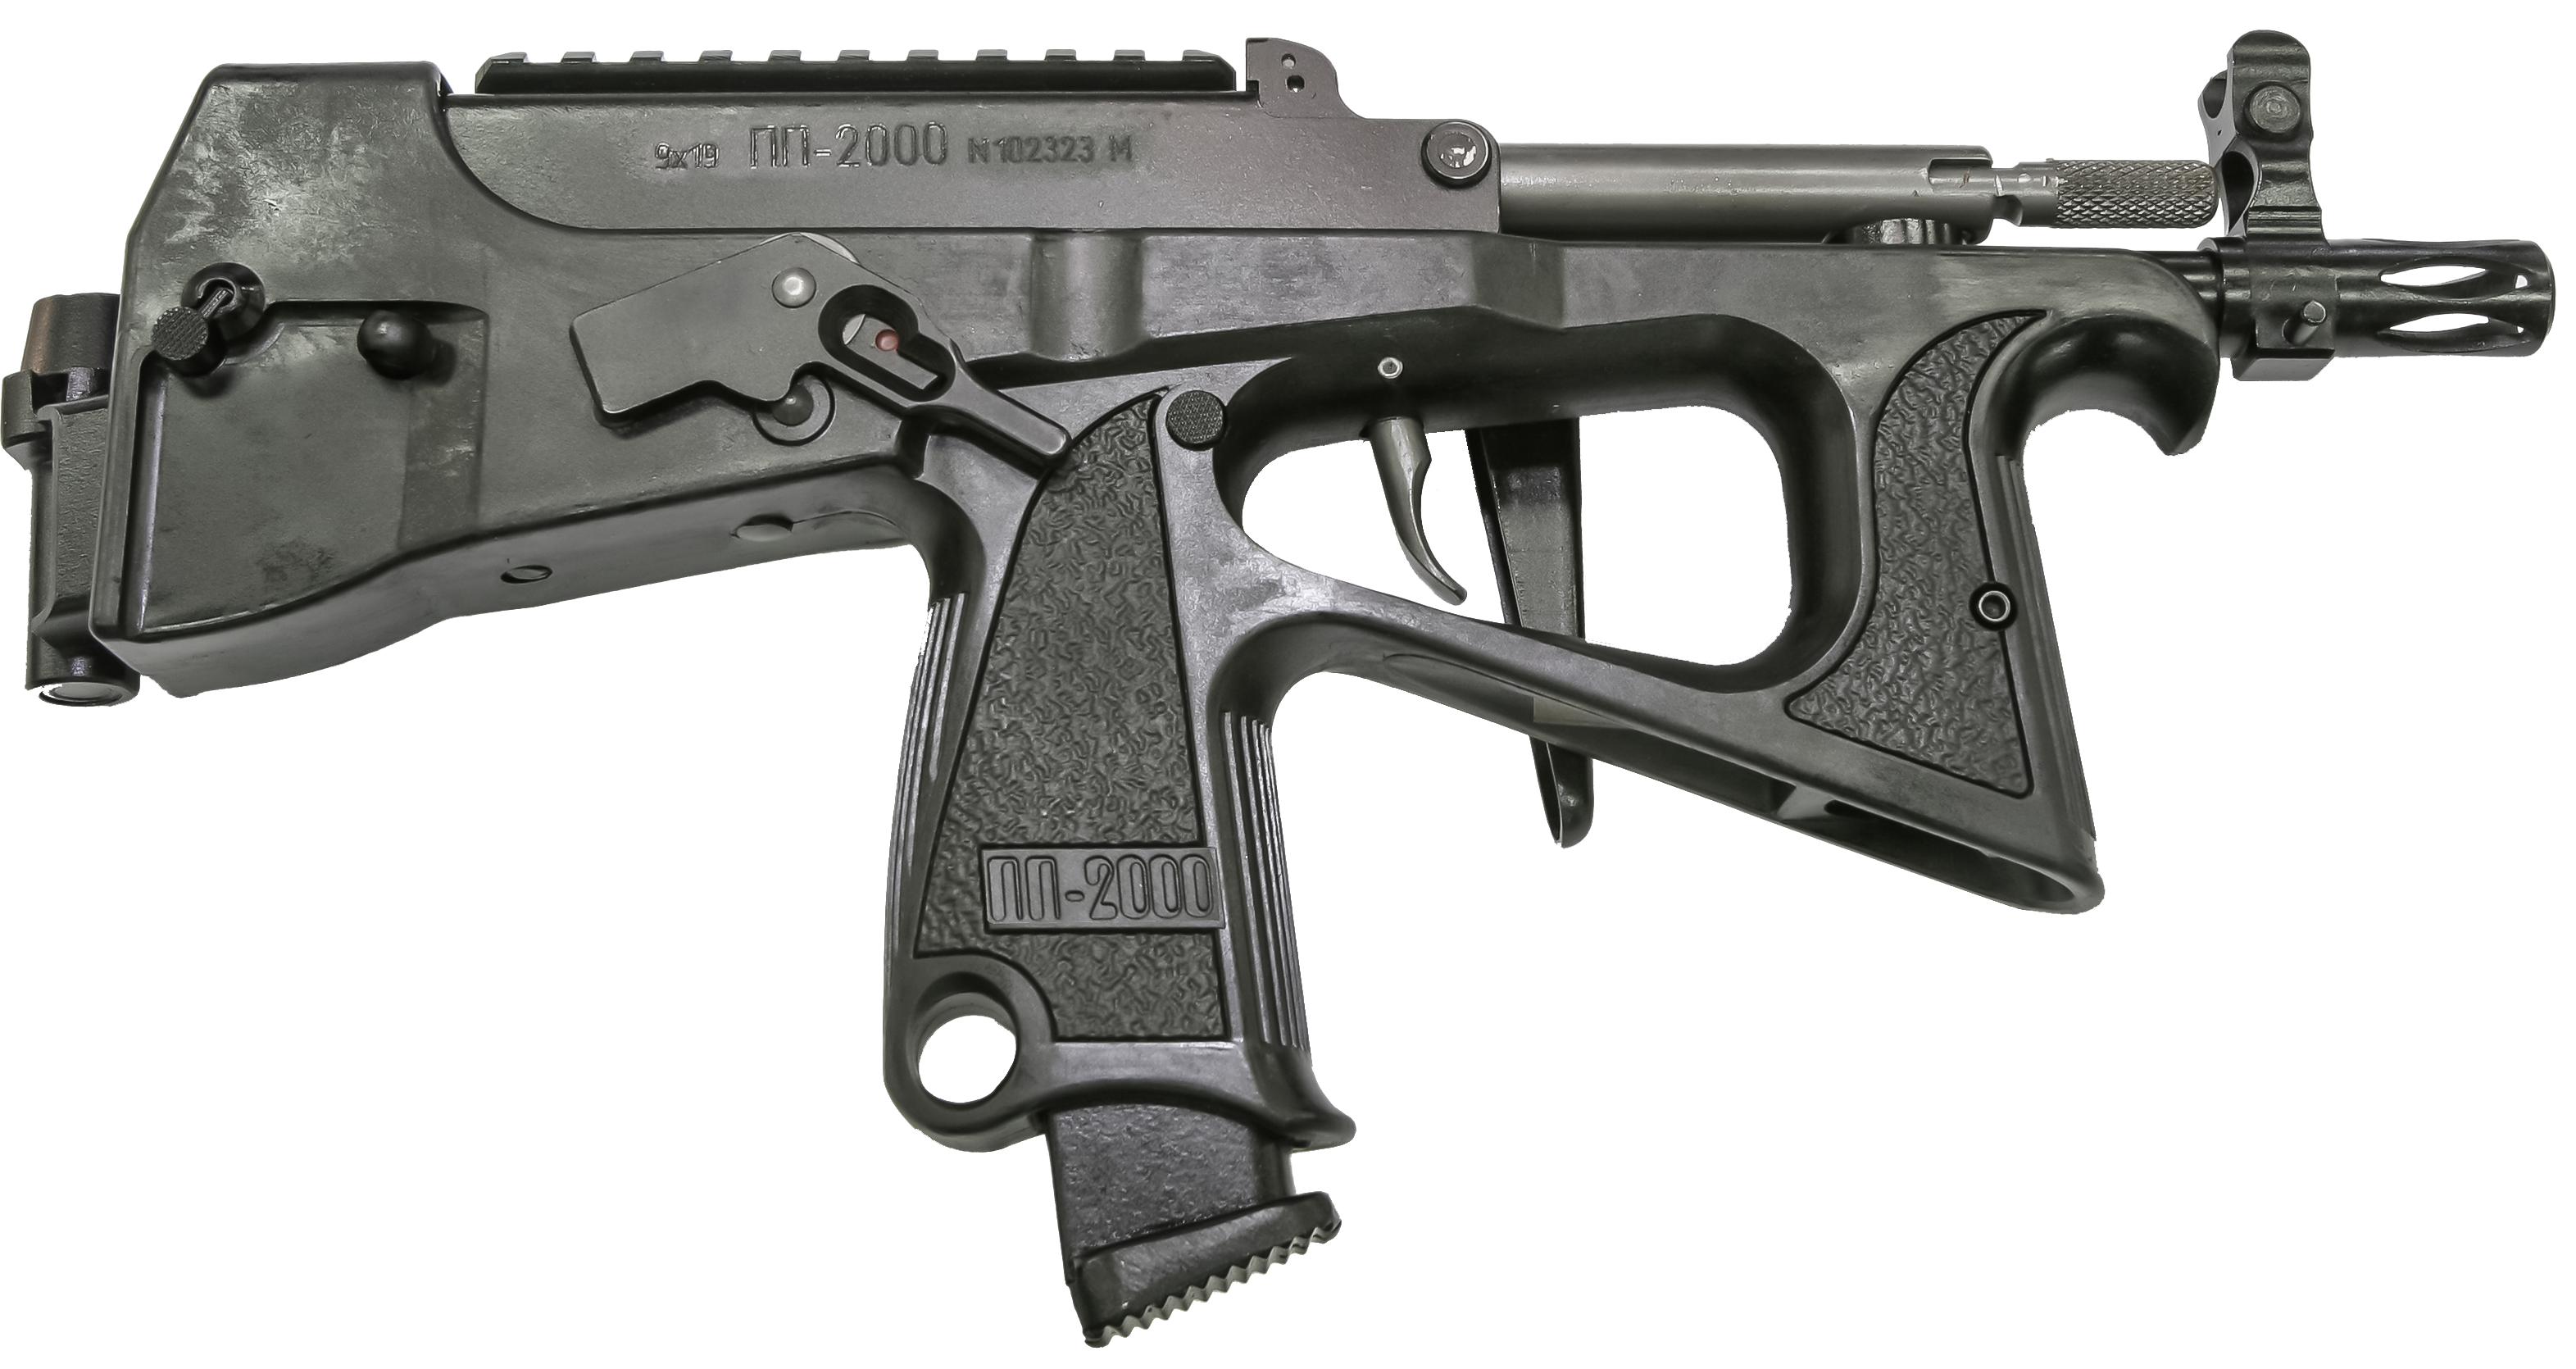 PP-2000 Submachine Gun: a Last-Ditch Weapon